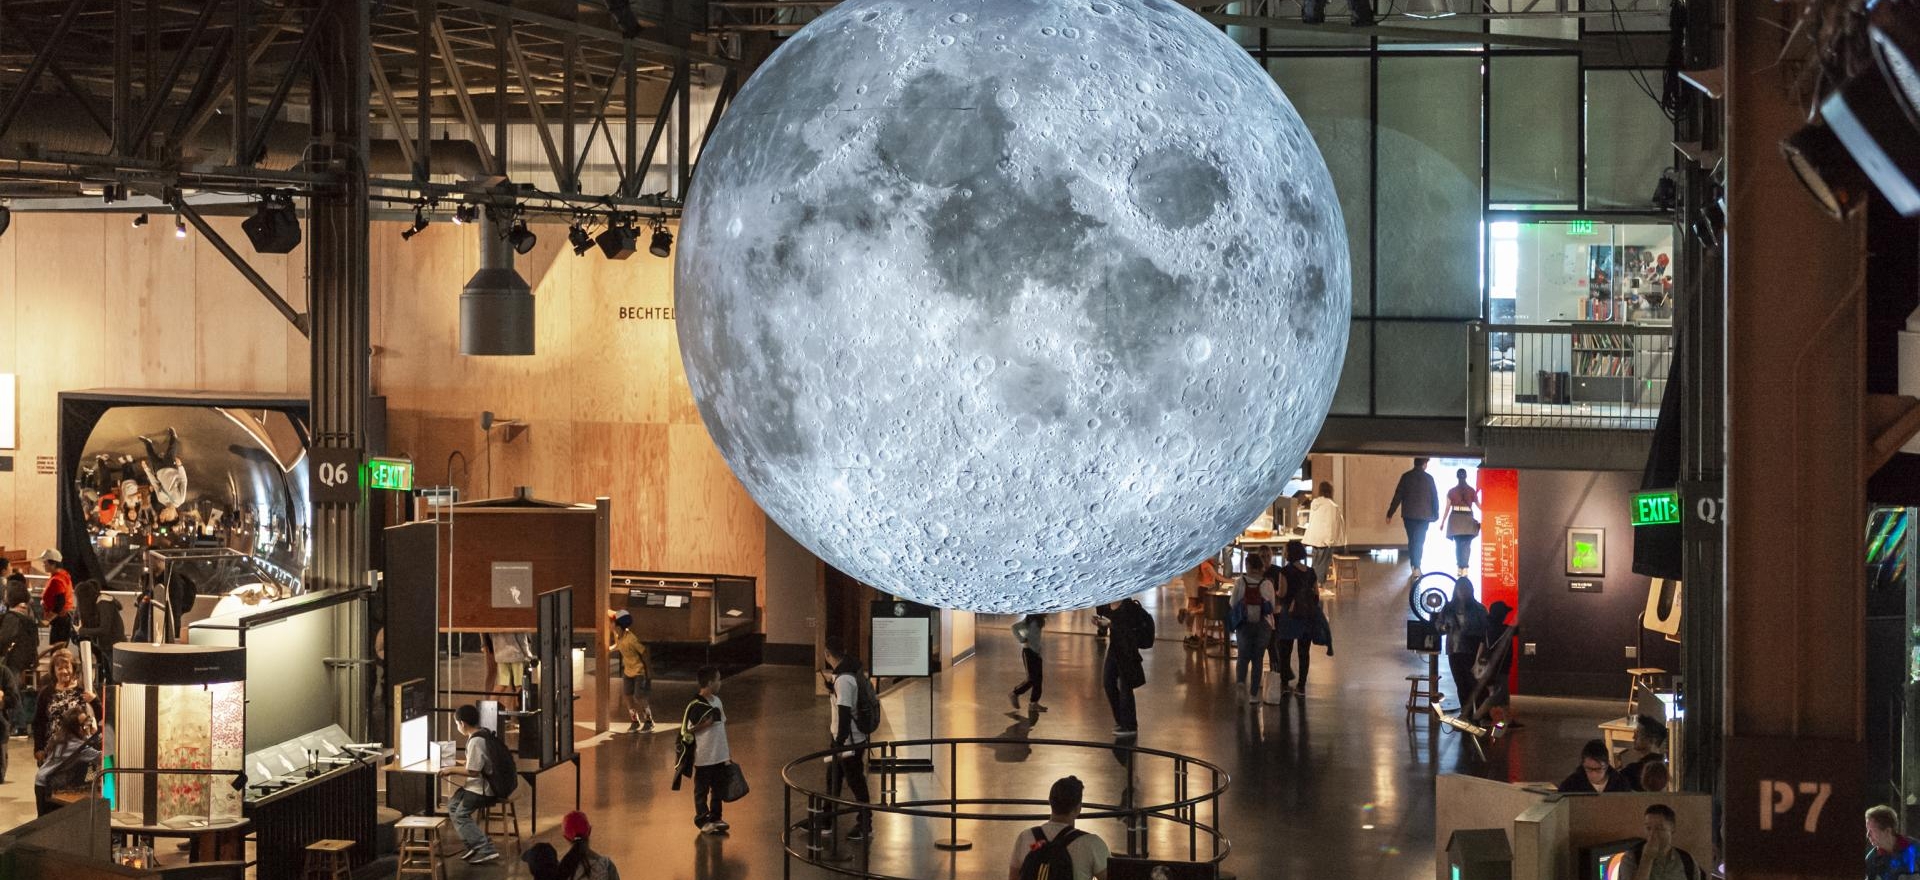 San Francisco Exploratorium; Art show of moon hung in museum in San Francisco